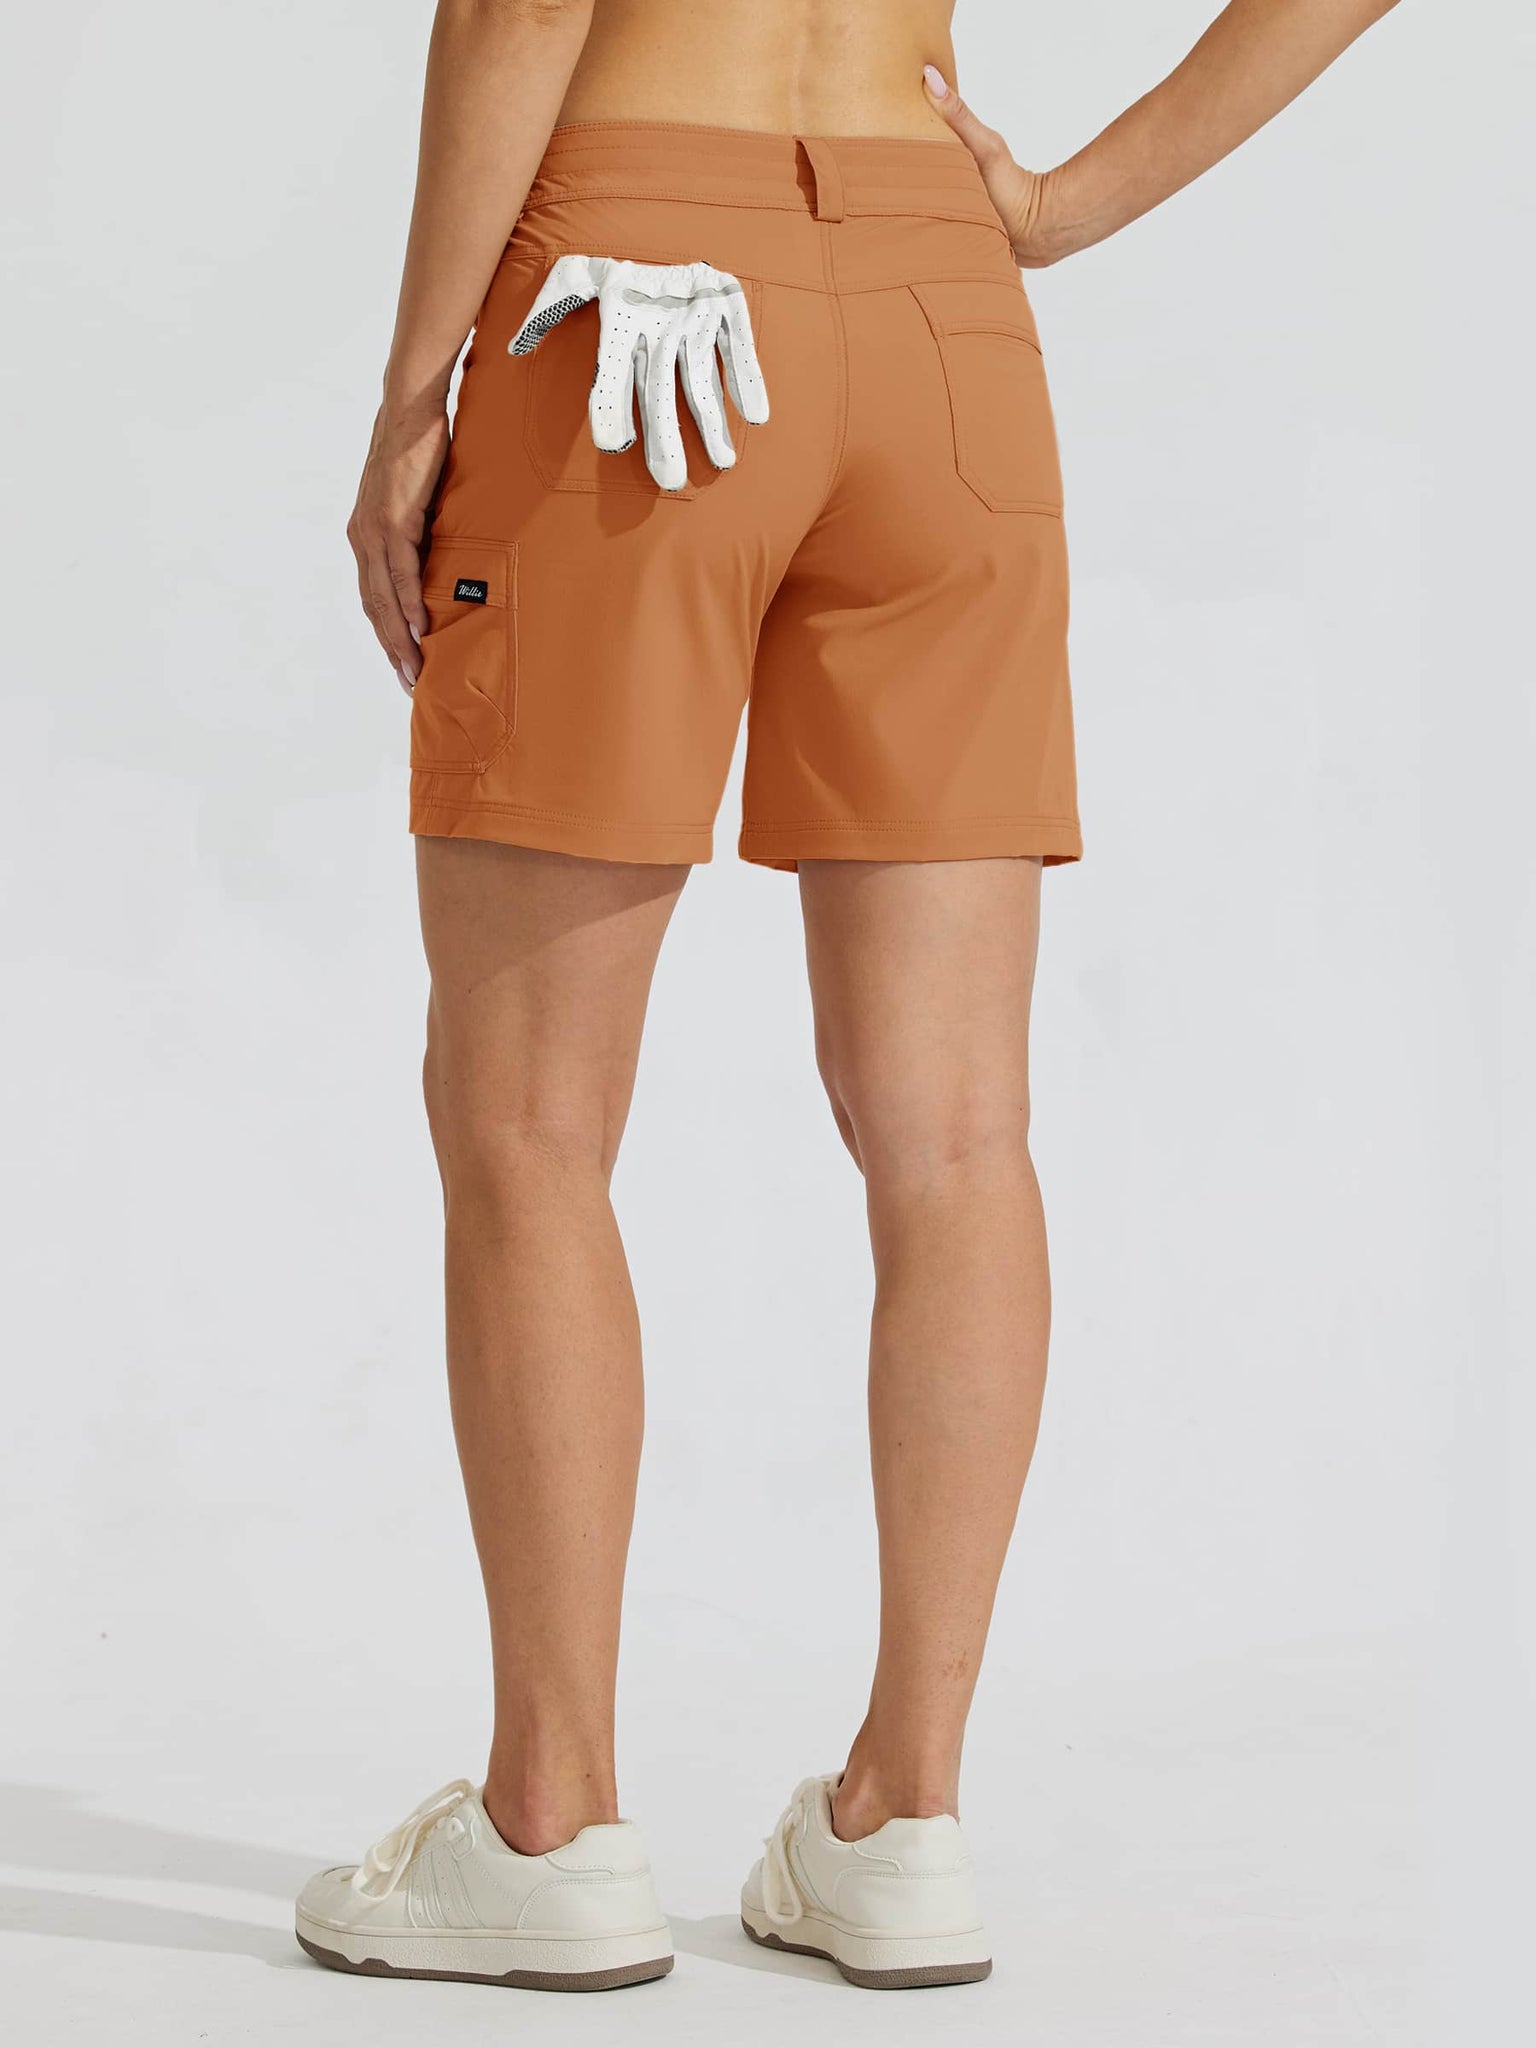 Women's Outdoor Shorts Copper_model1